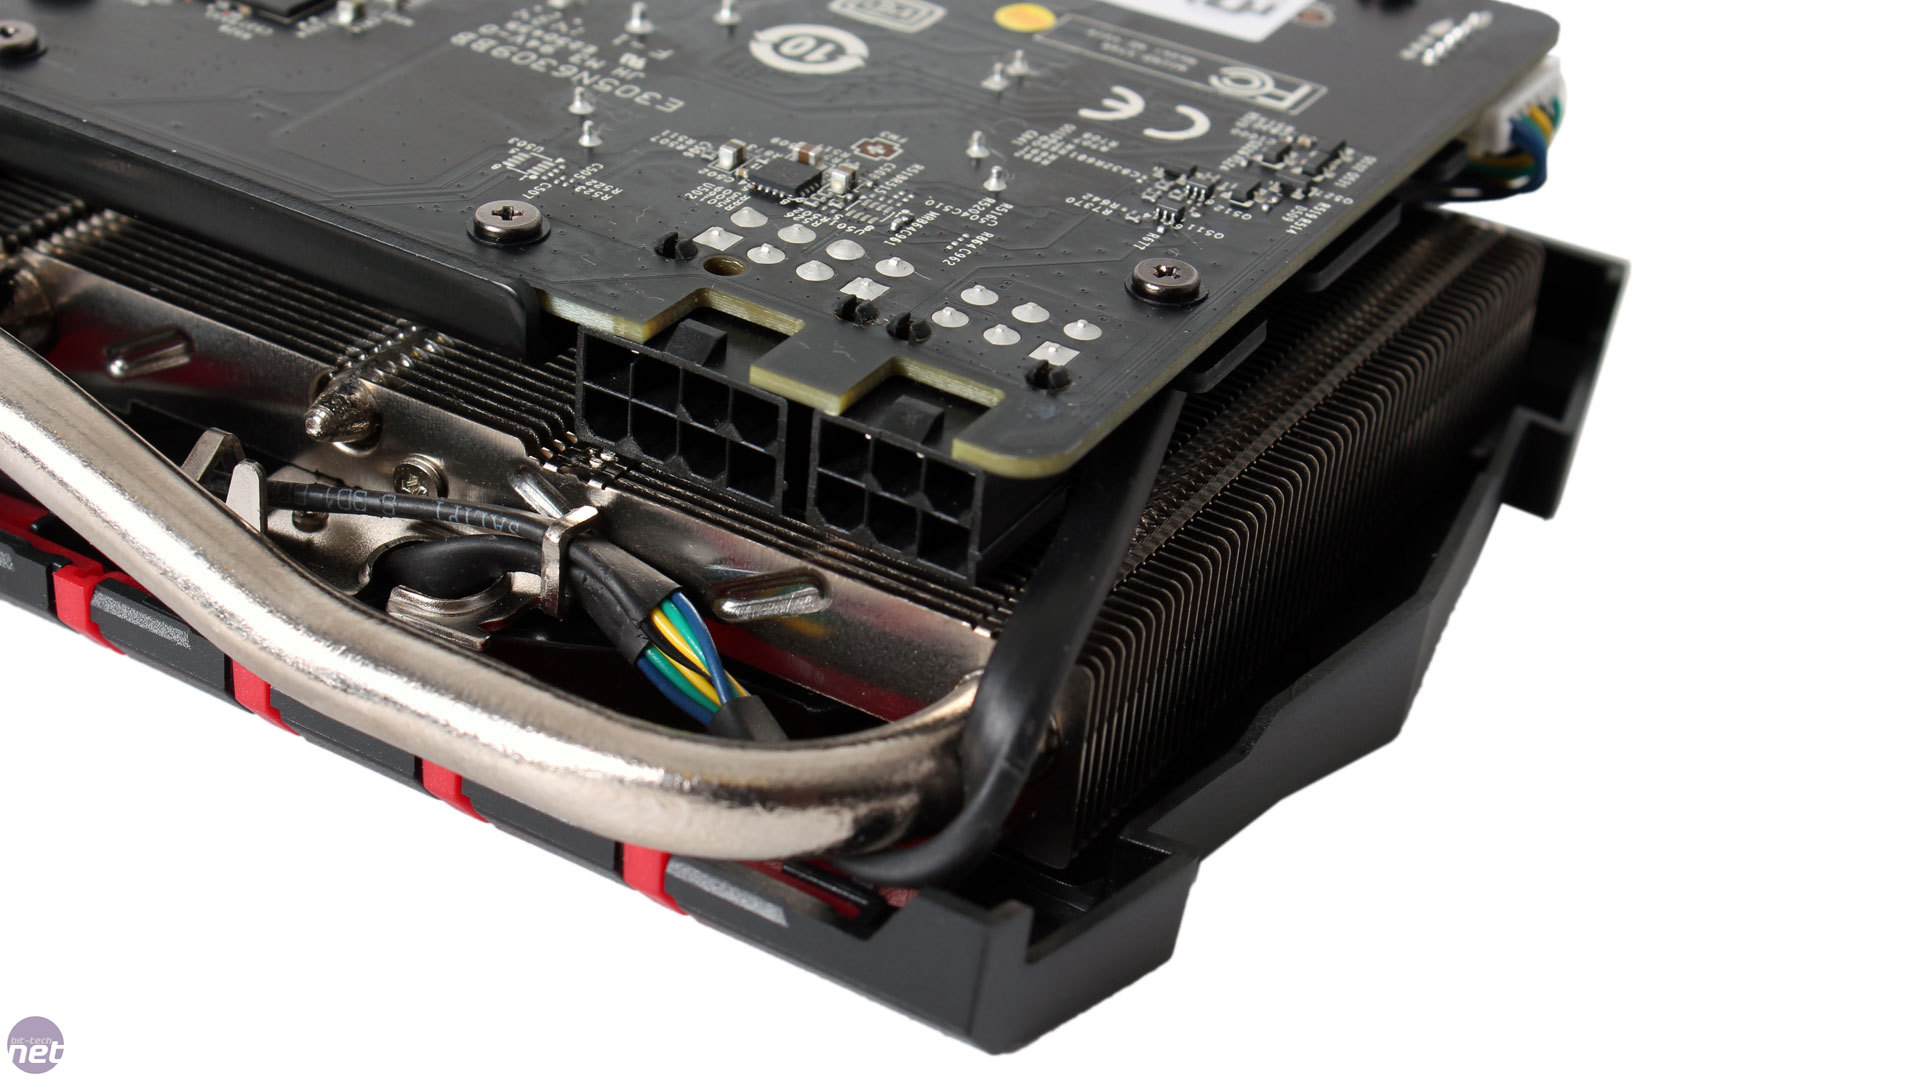 Nvidia GeForce GTX 970 Review Roundup 